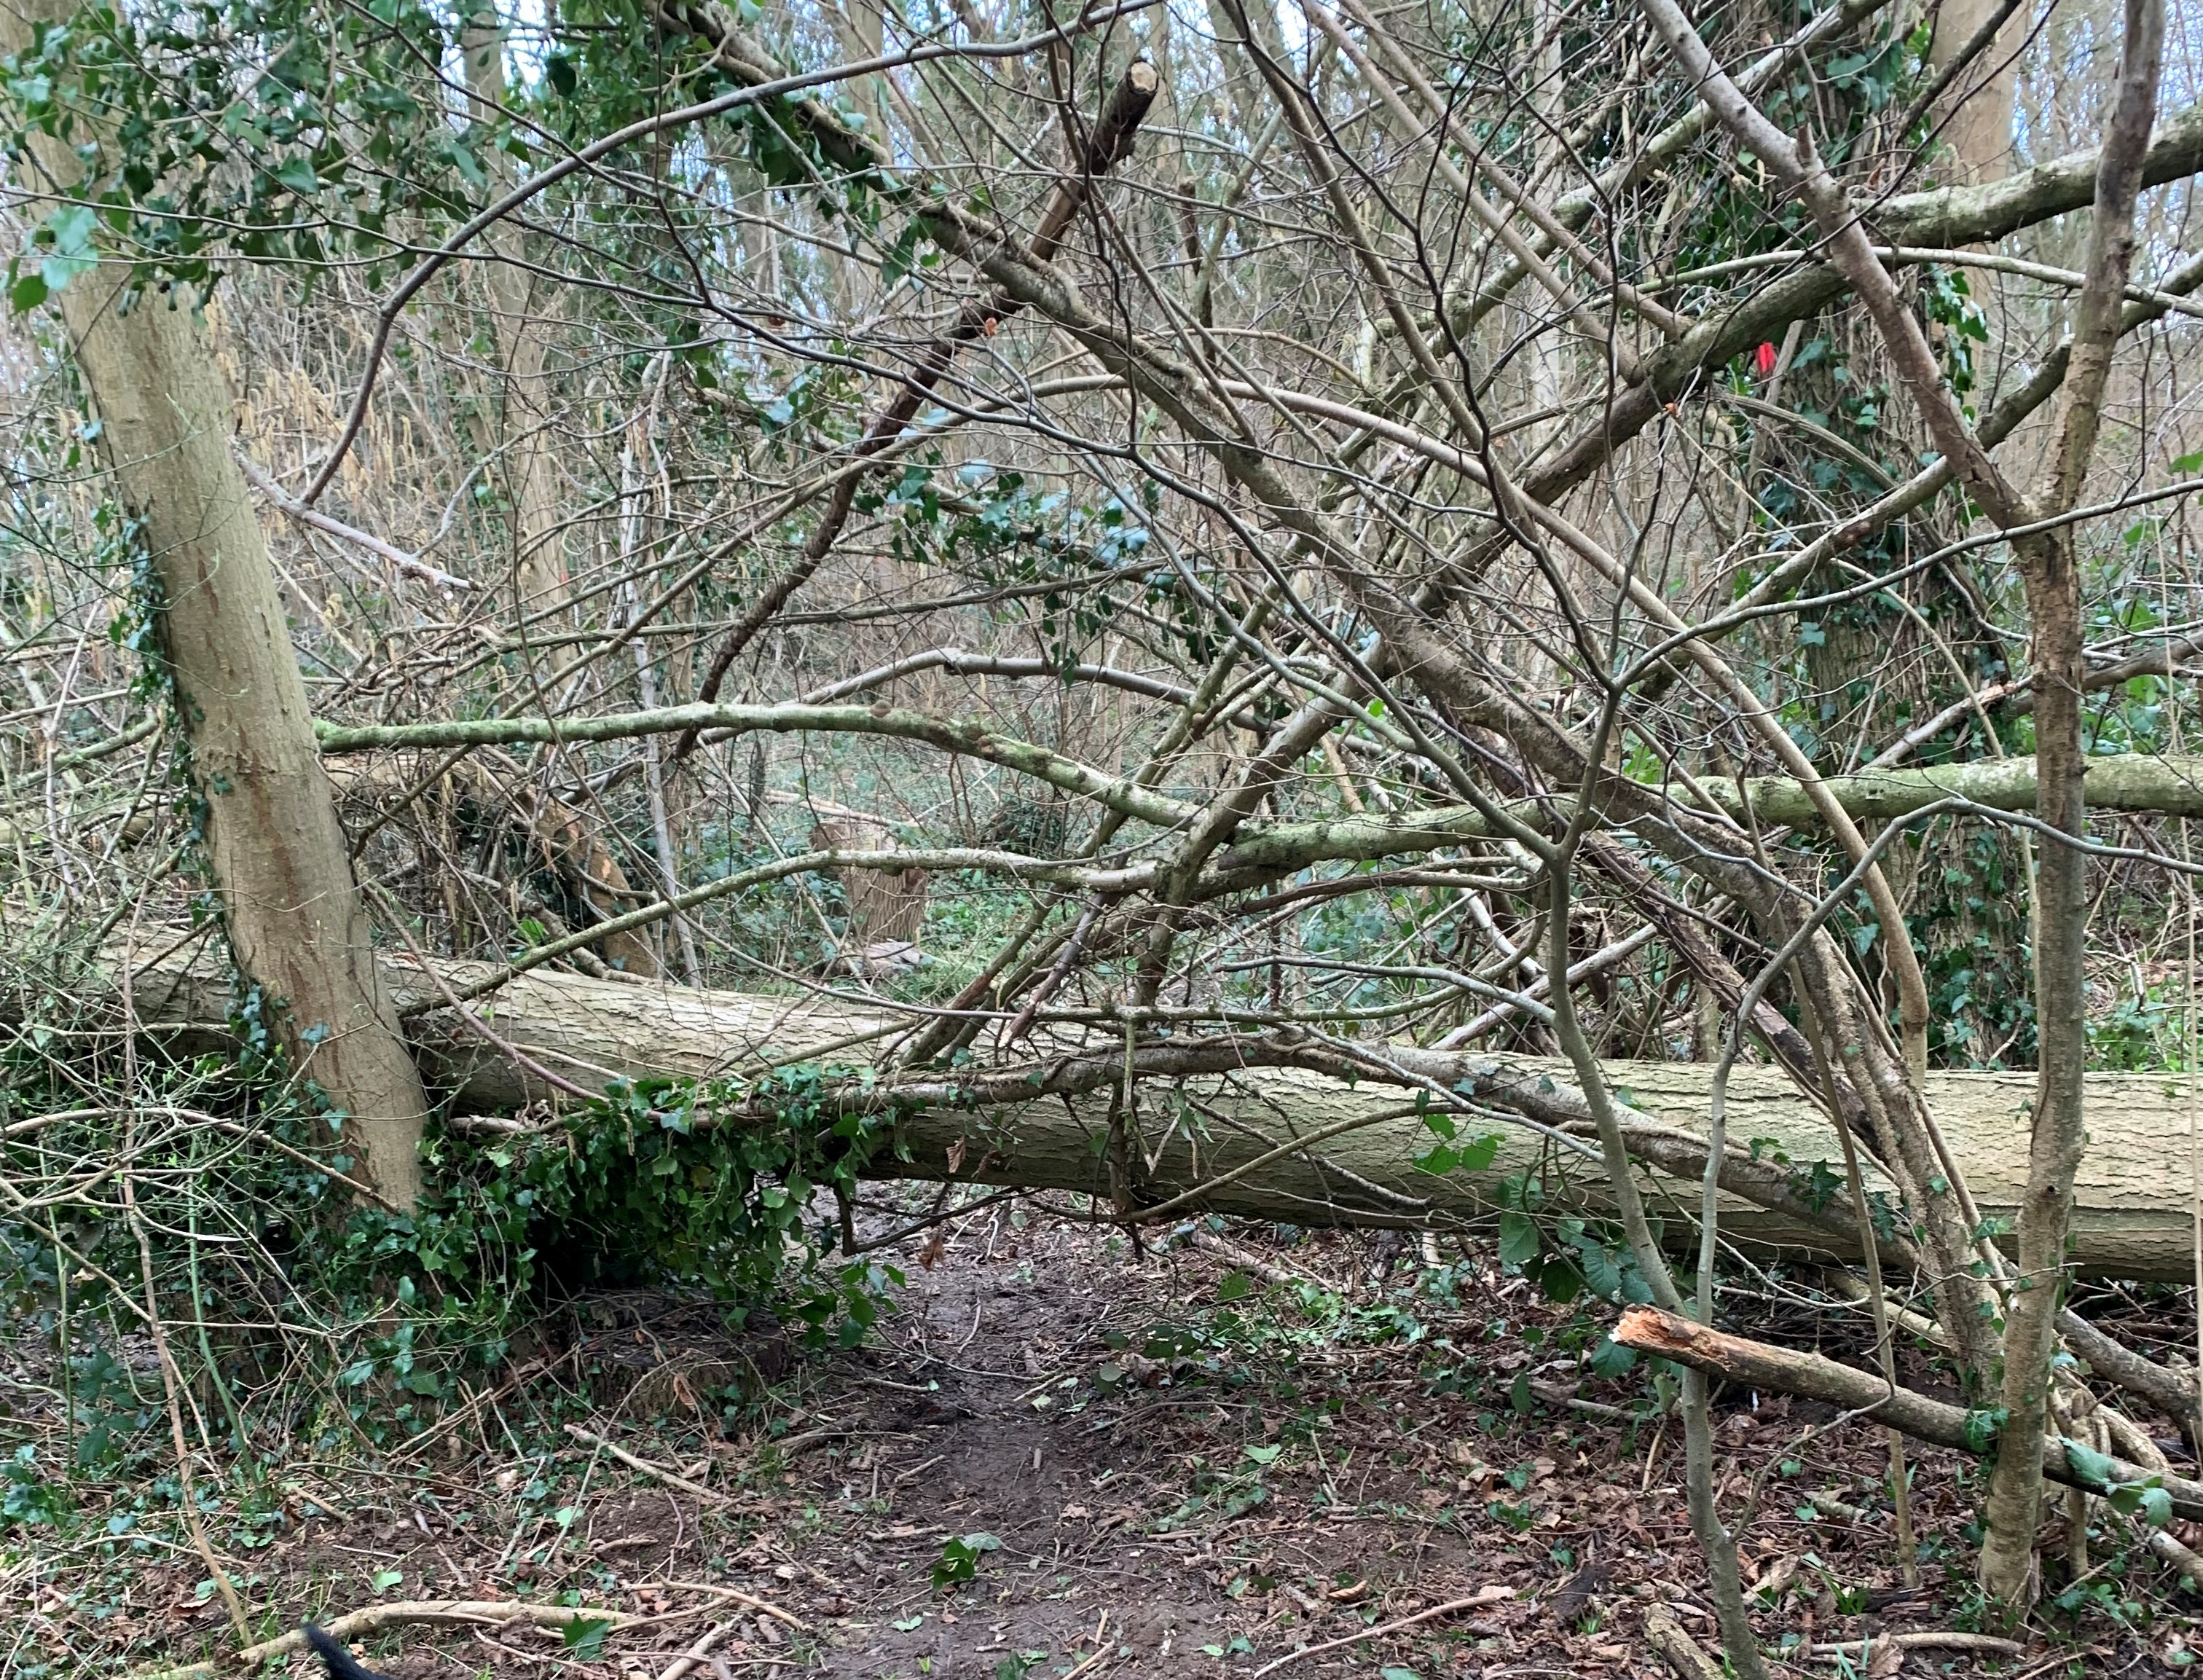 Urgent closure of Larkey Valley Wood